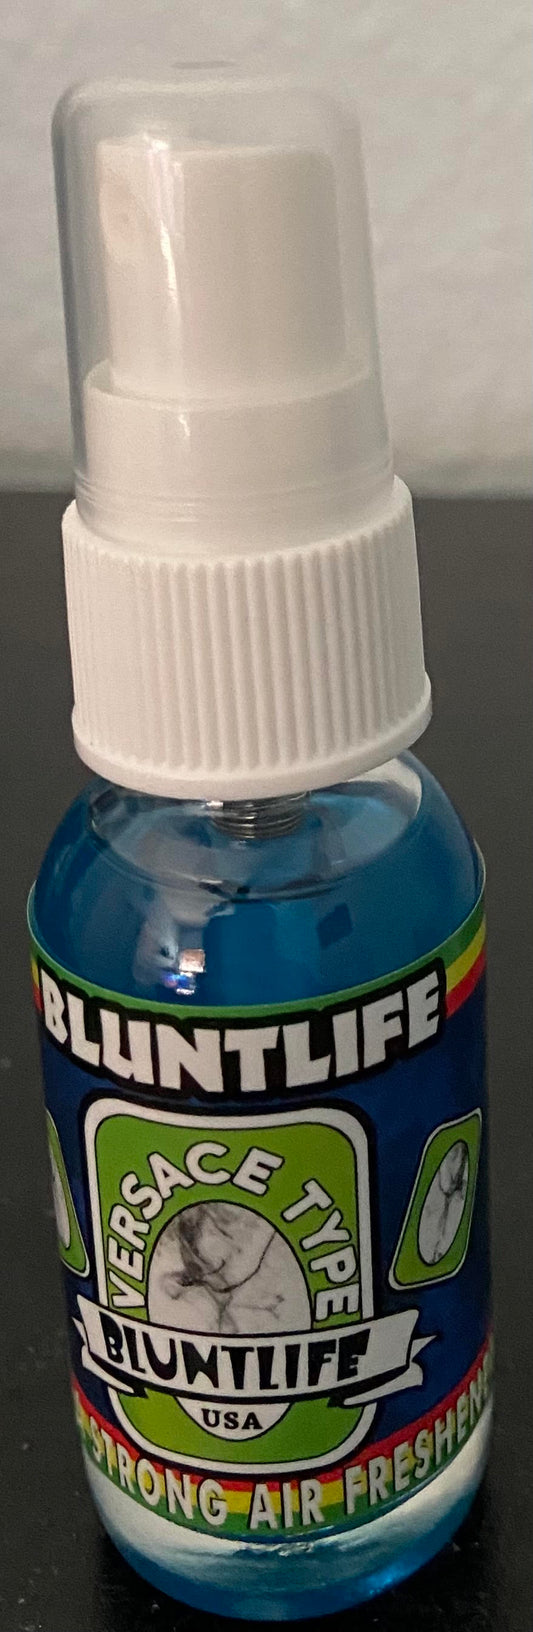 BluntLife Air Freshener Spray 1.0 oz. Bottle Long Lasting - Choose Your Scent (Versace Type))